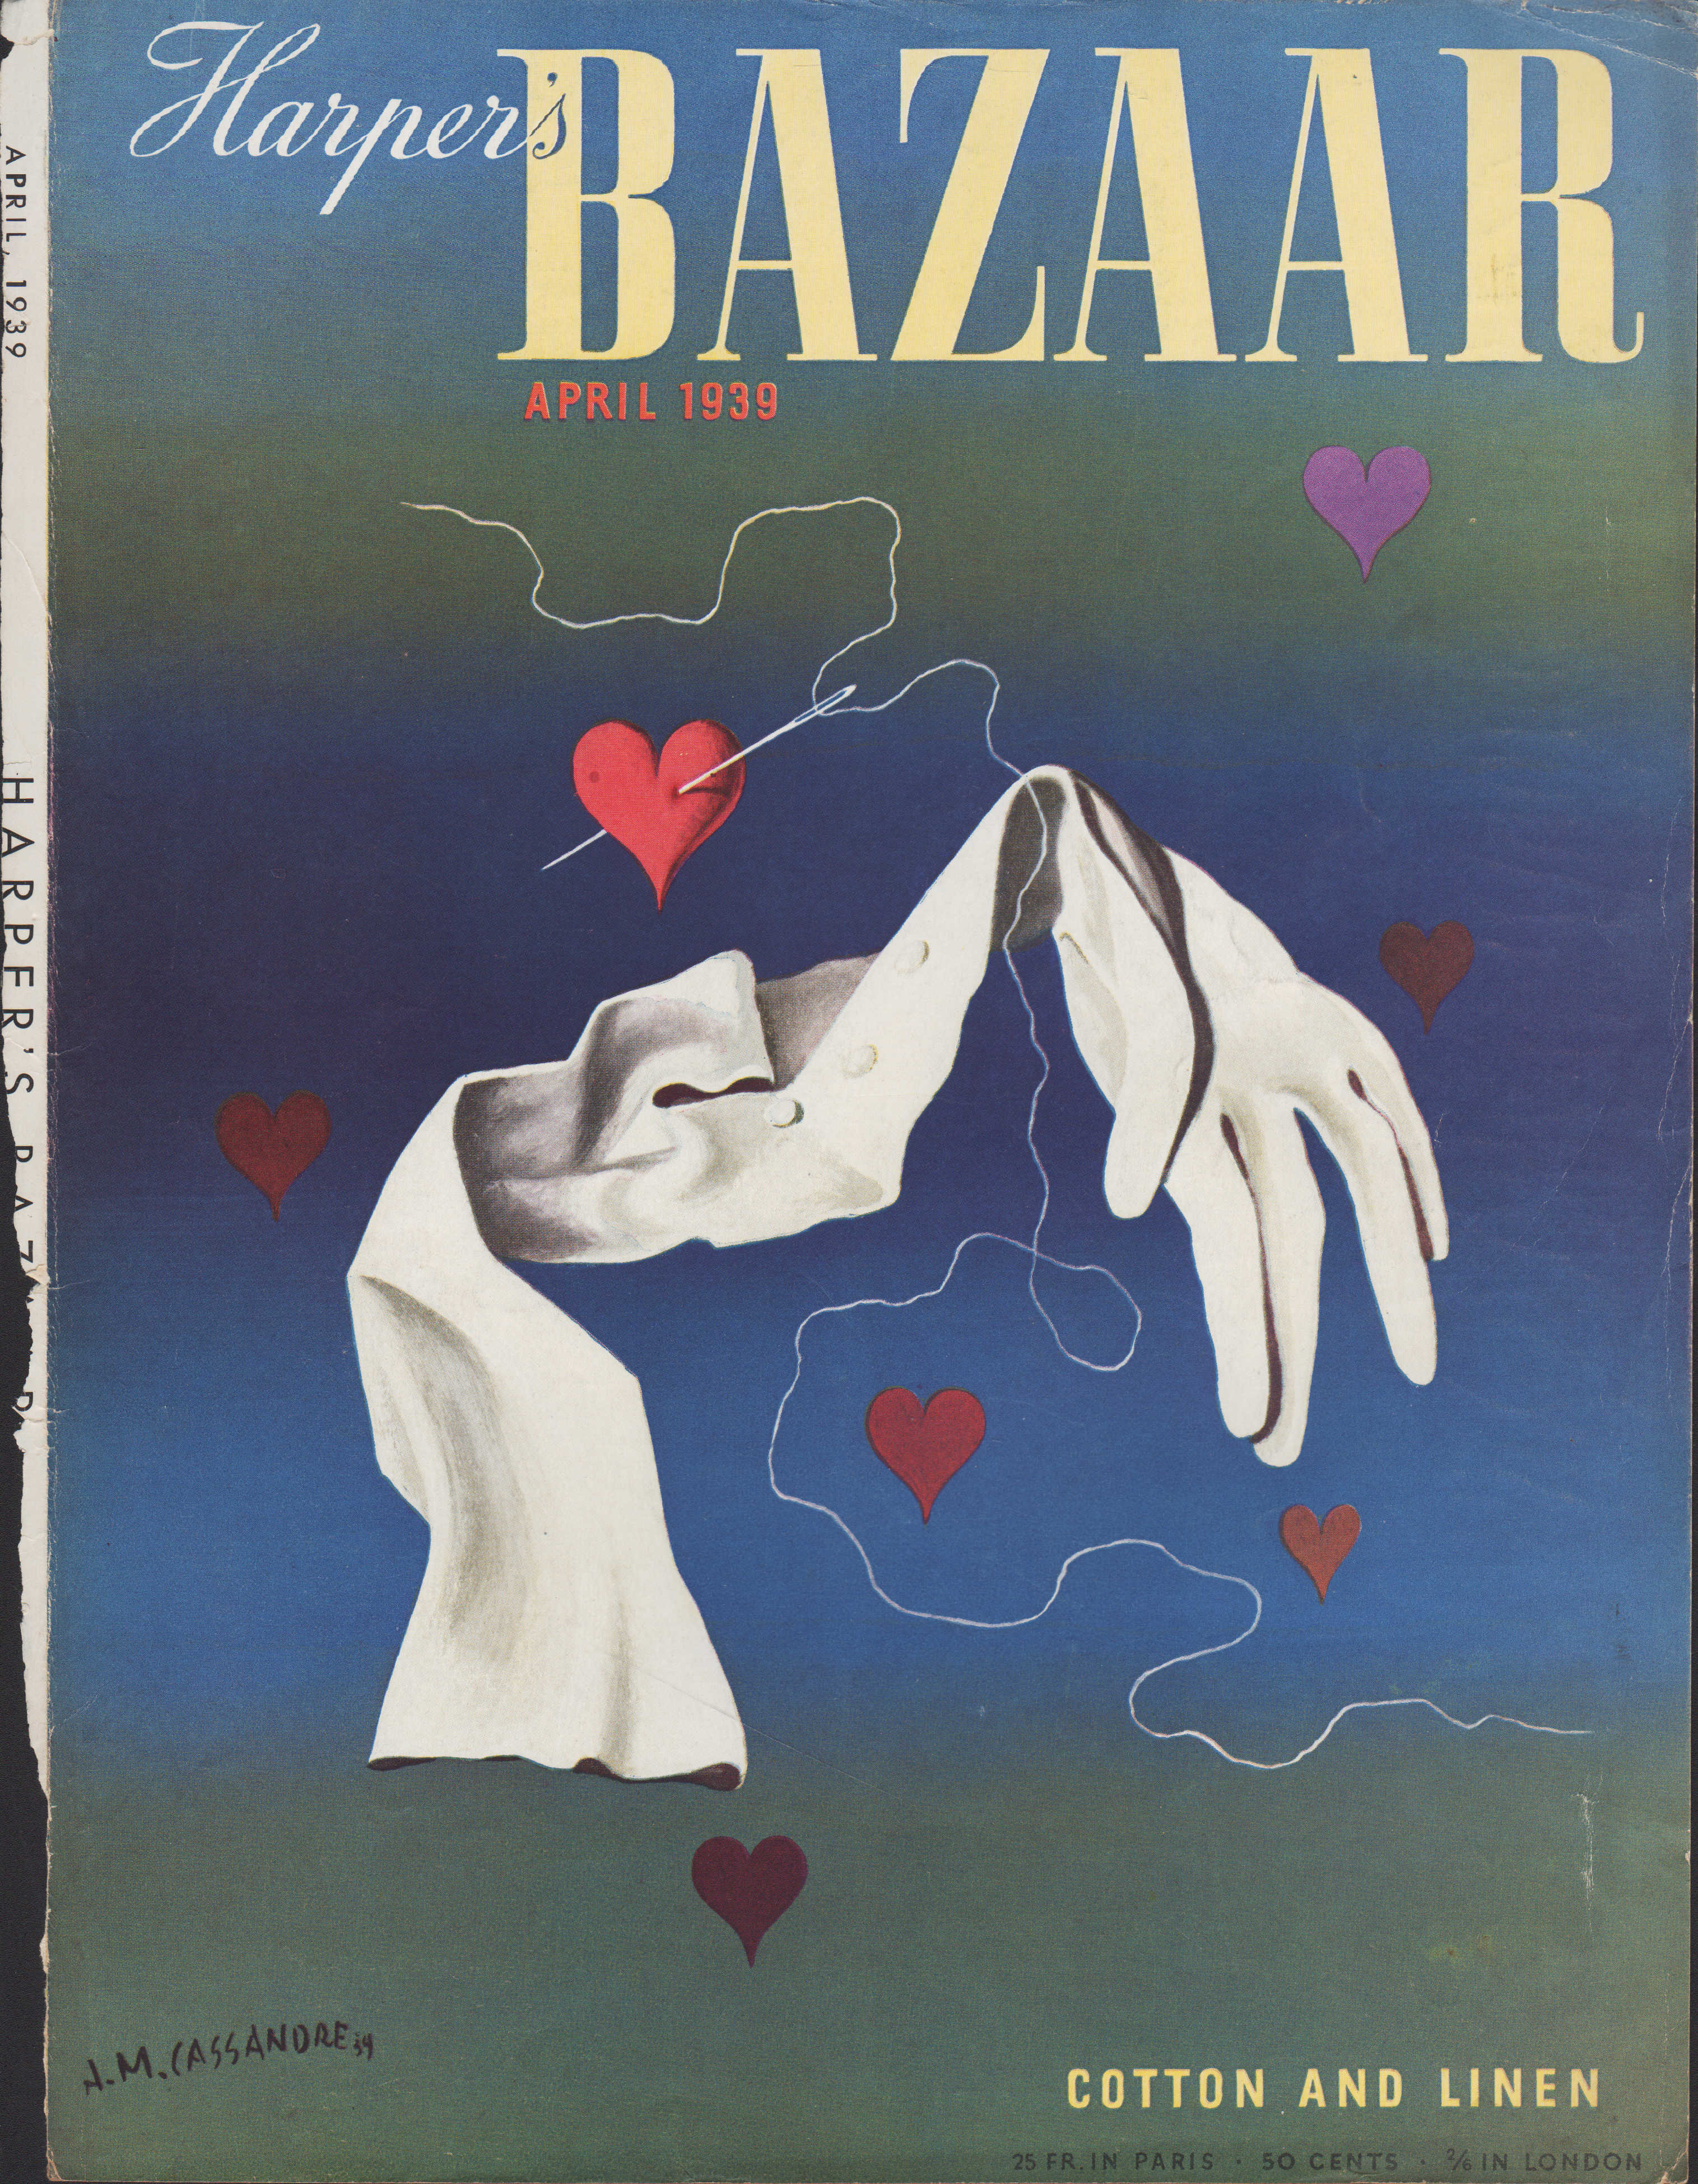 Harper's Bazar (Harper's Bazaar) - April, 1939 - Cover Only